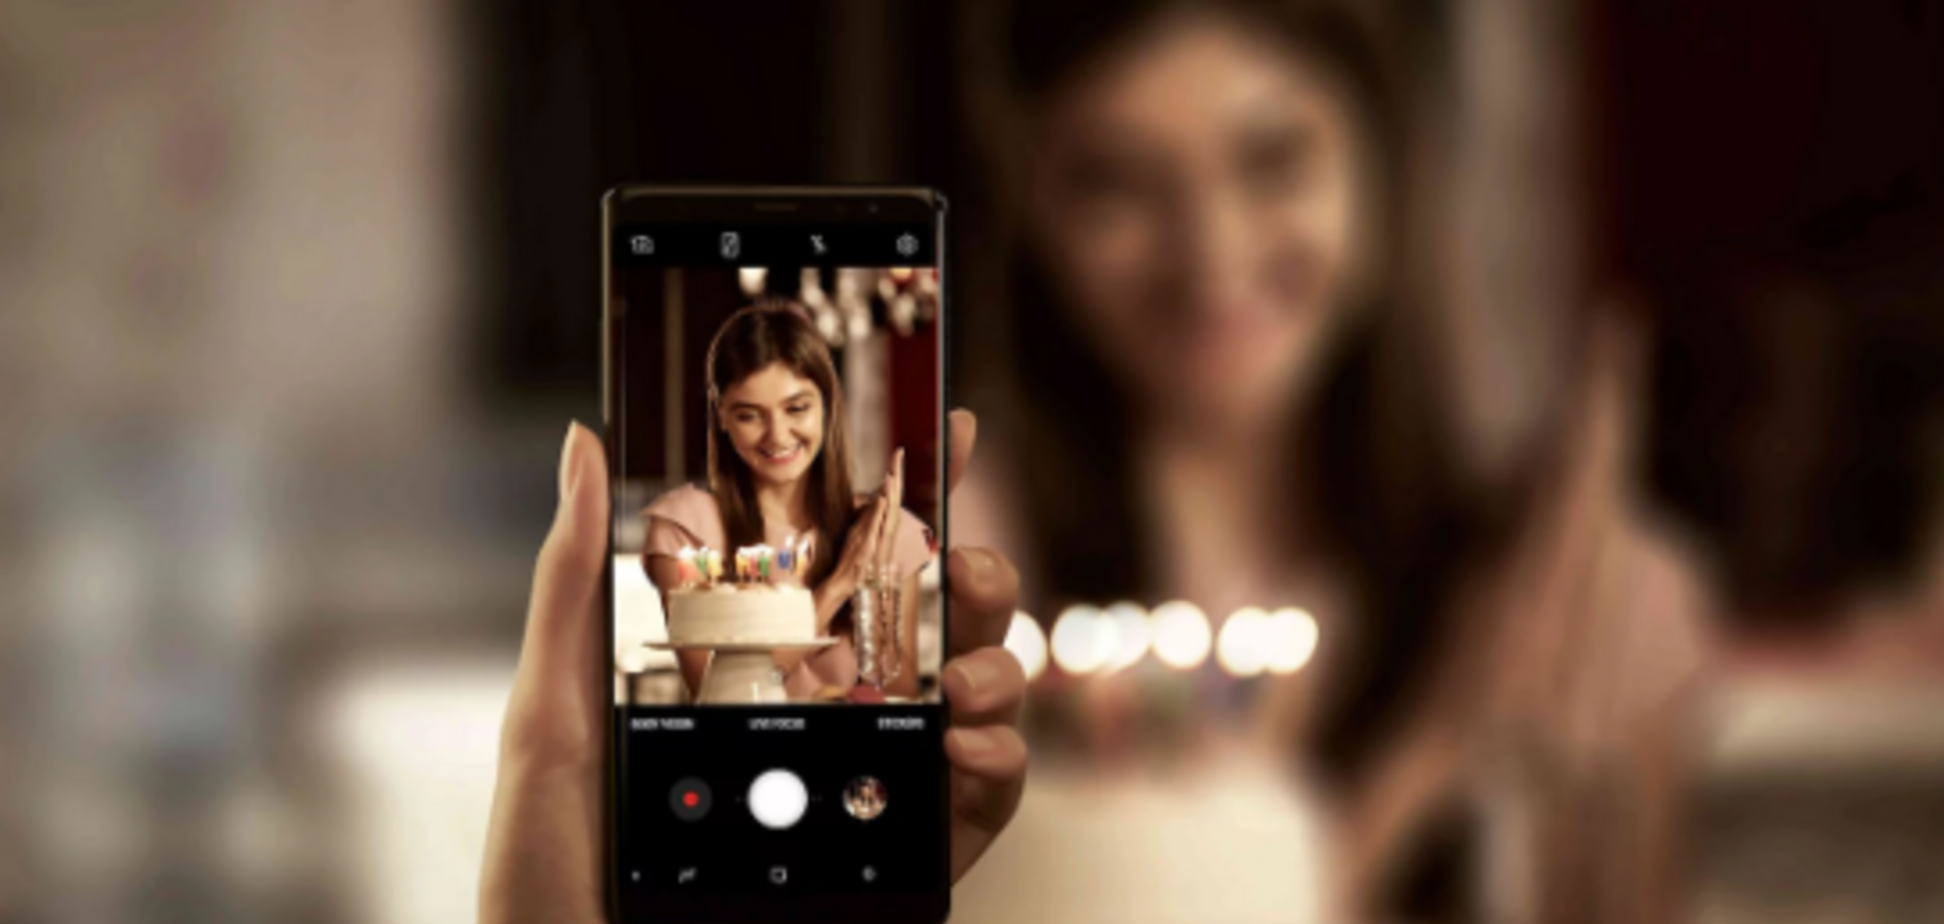 Galaxy Note 8: особенности нового смартфона и цена